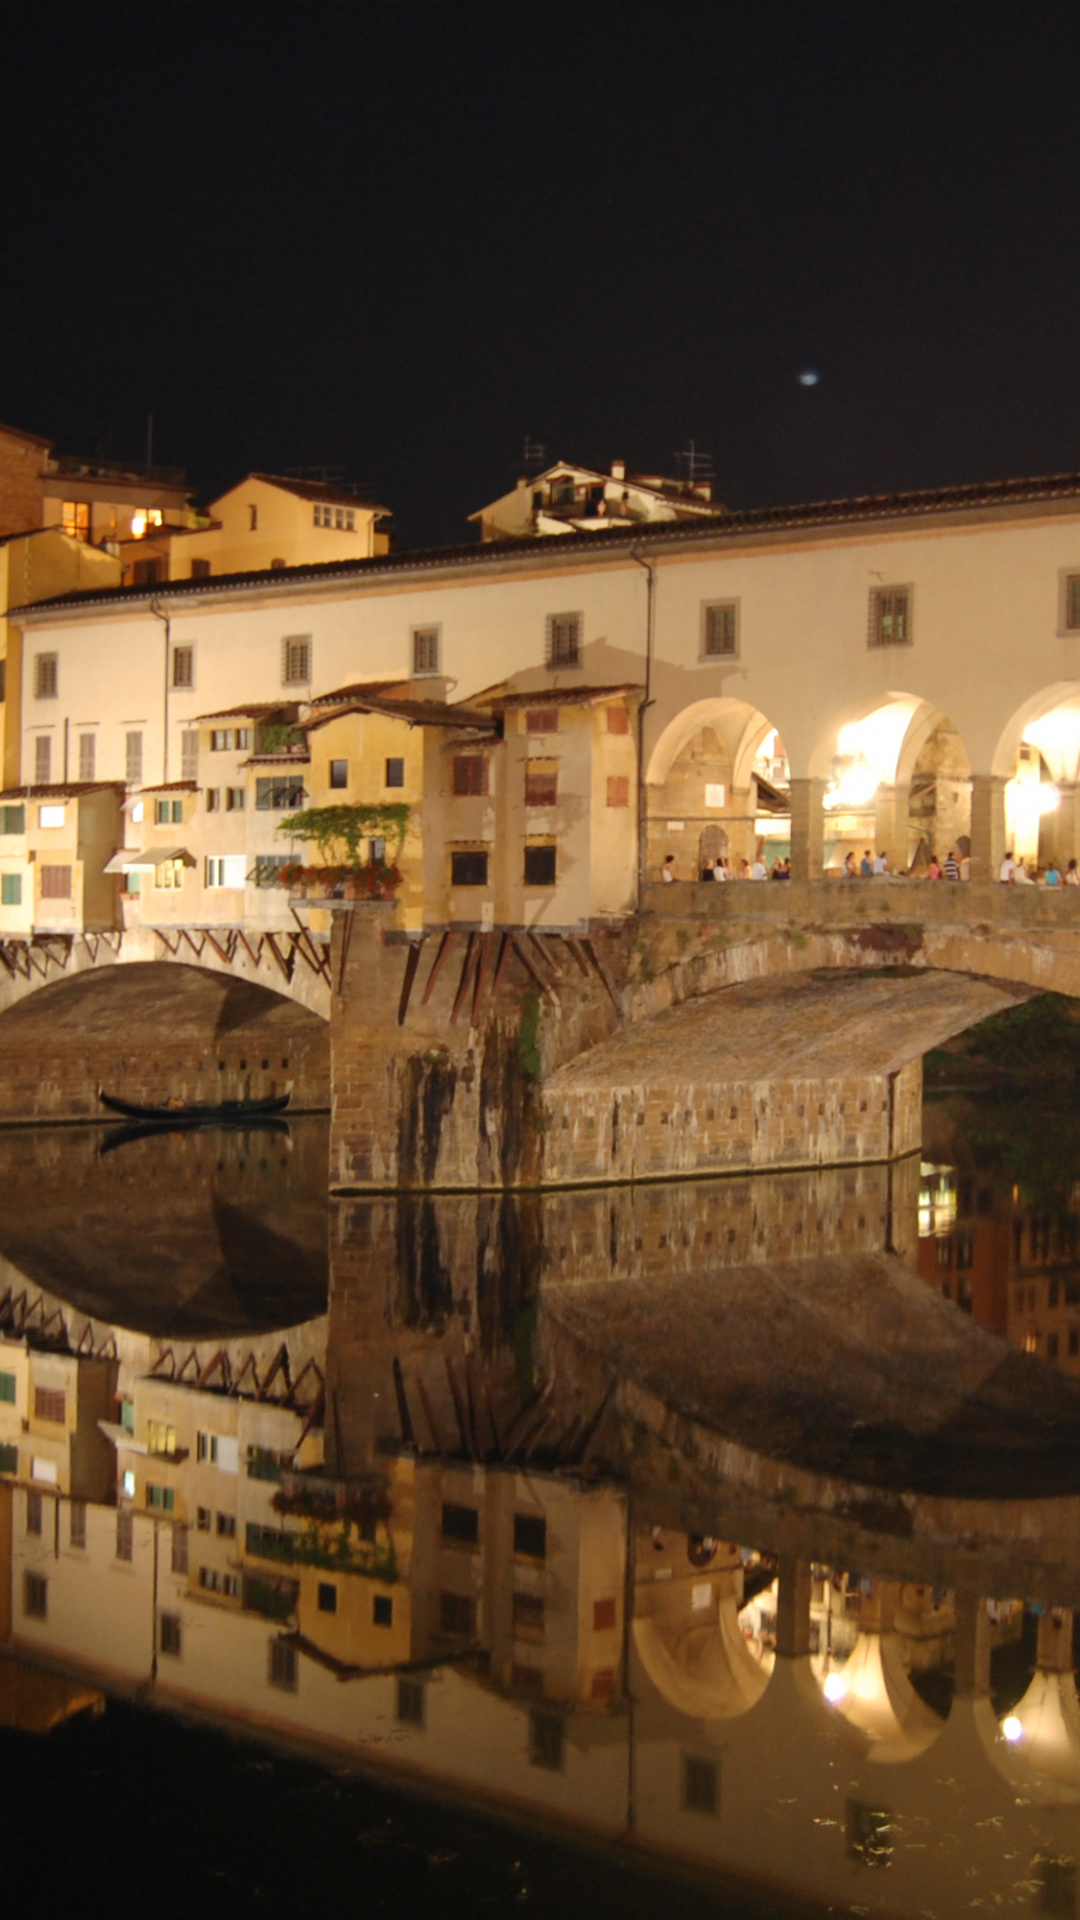 Florence: Ponte Vecchio, The oldest Florentine bridge. 1080x1920 Full HD Wallpaper.